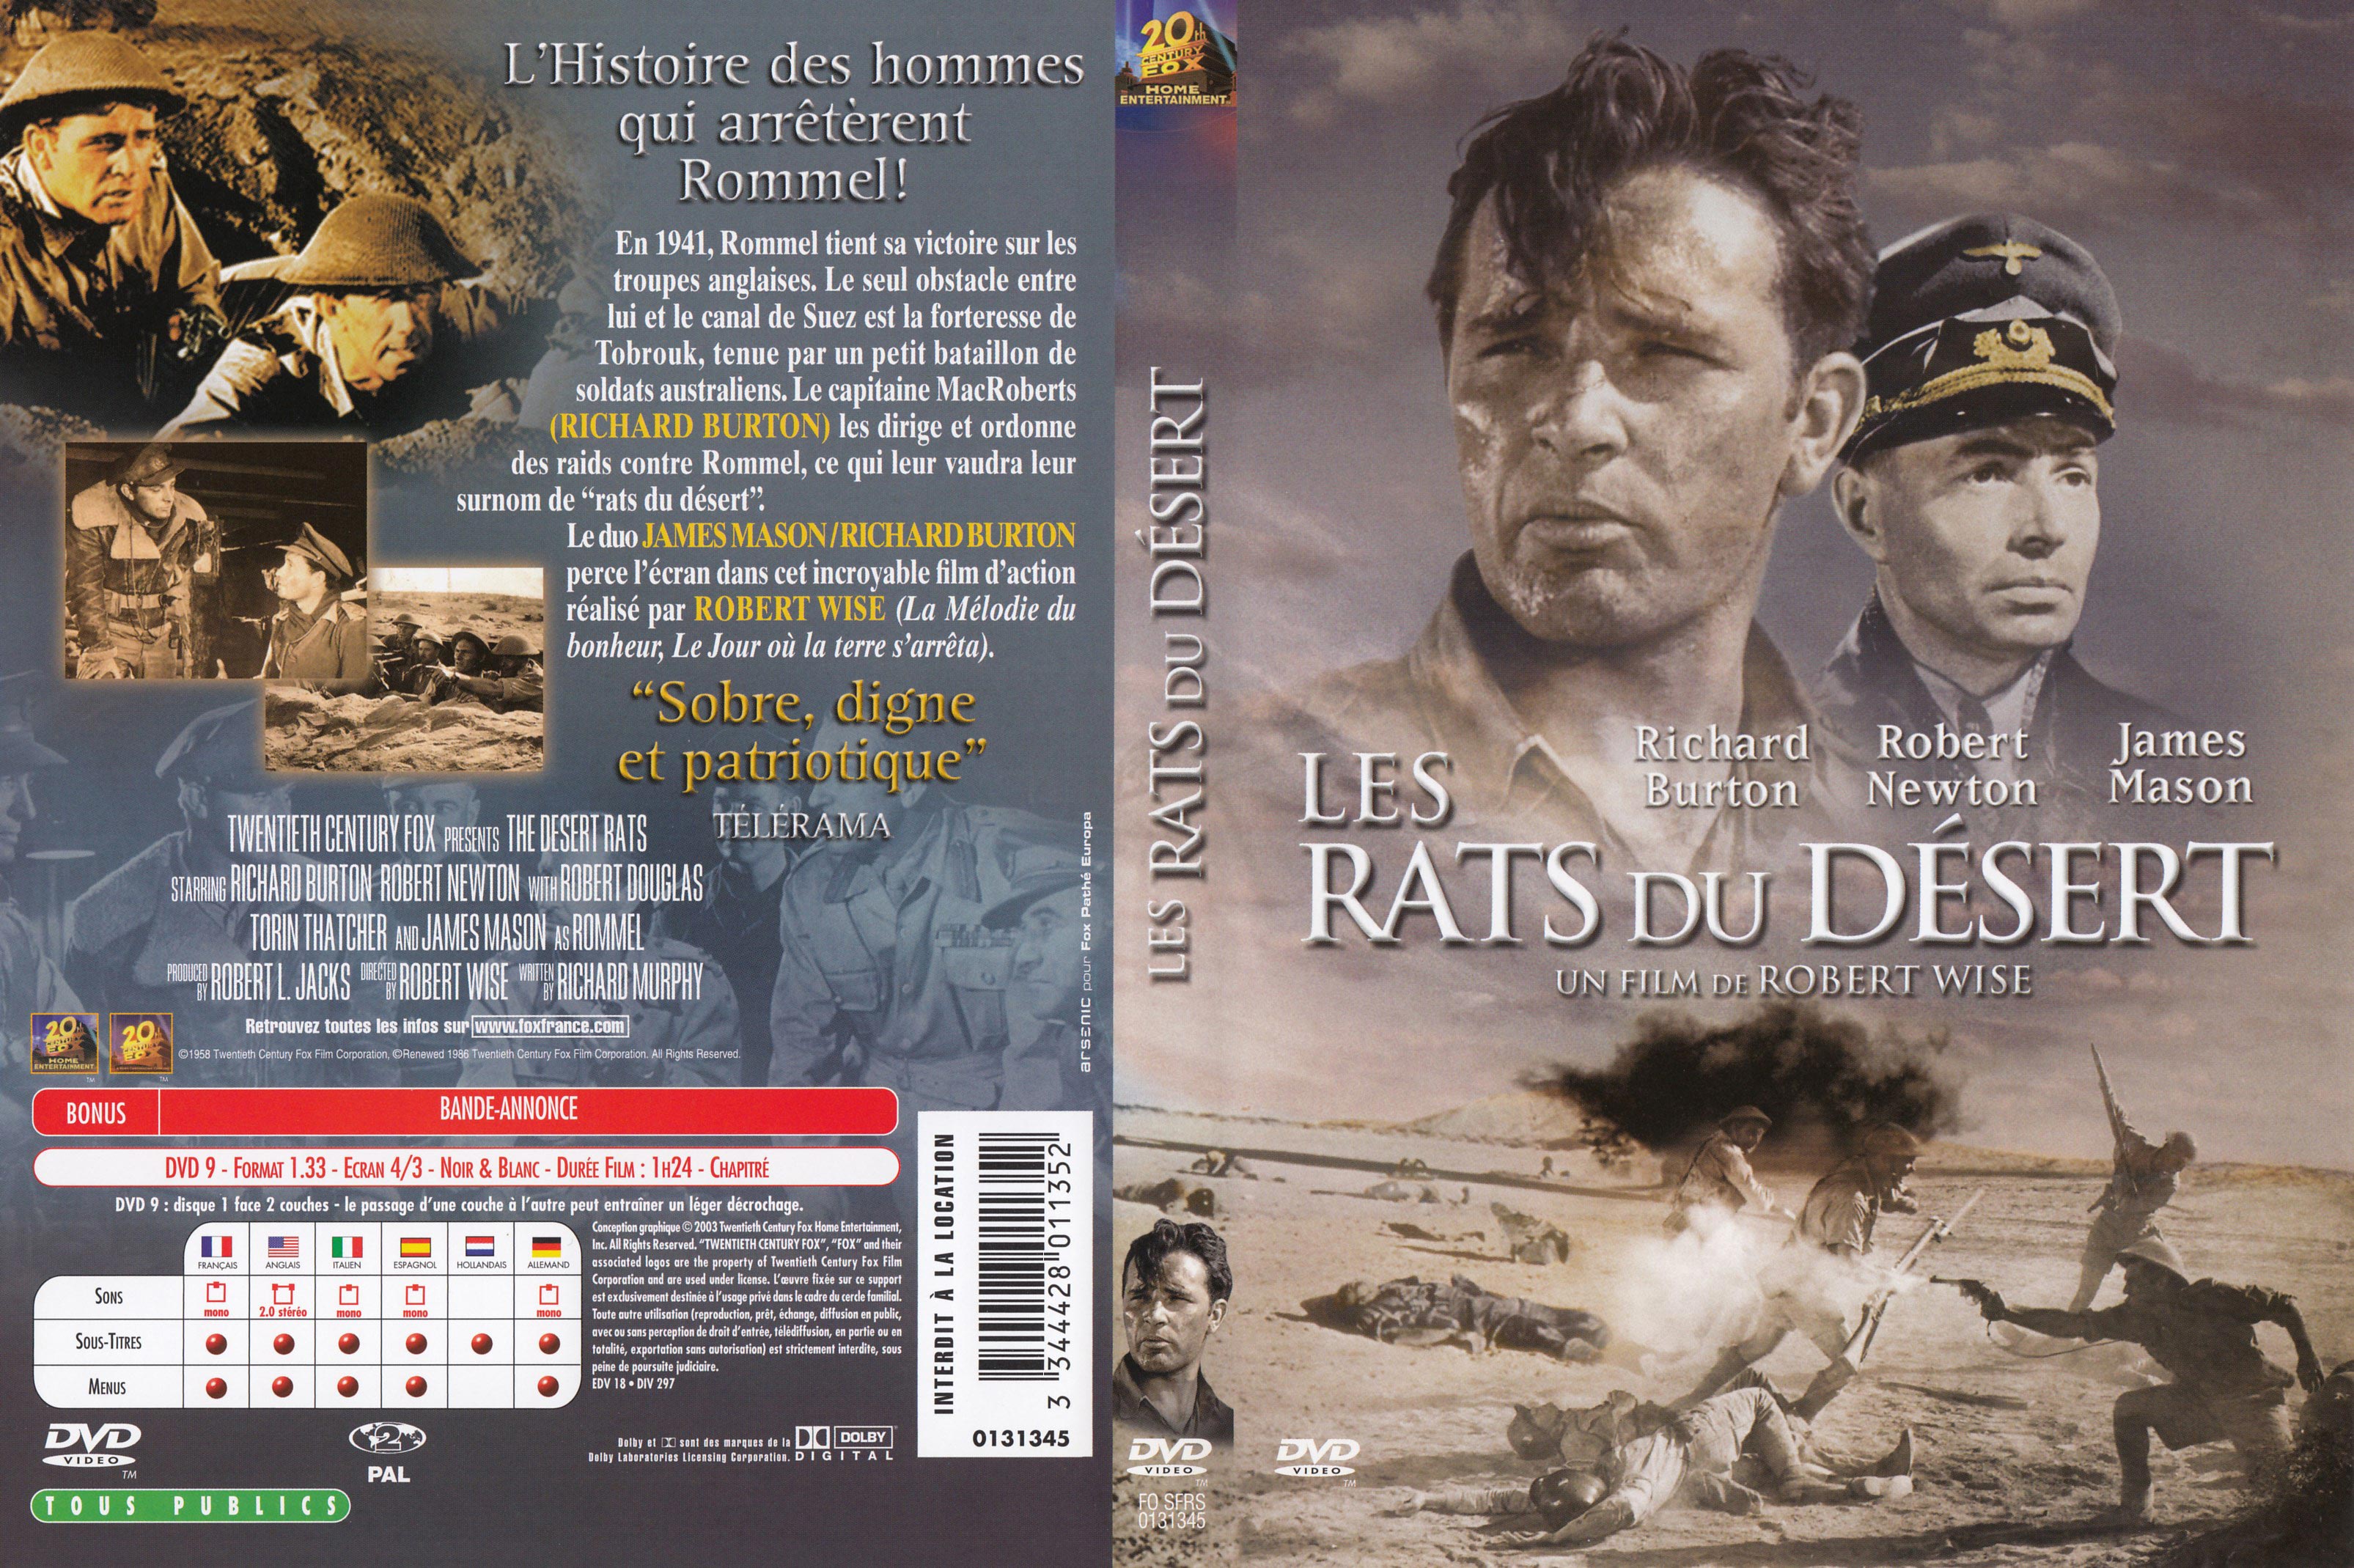 Jaquette DVD Les rats du dsert v2